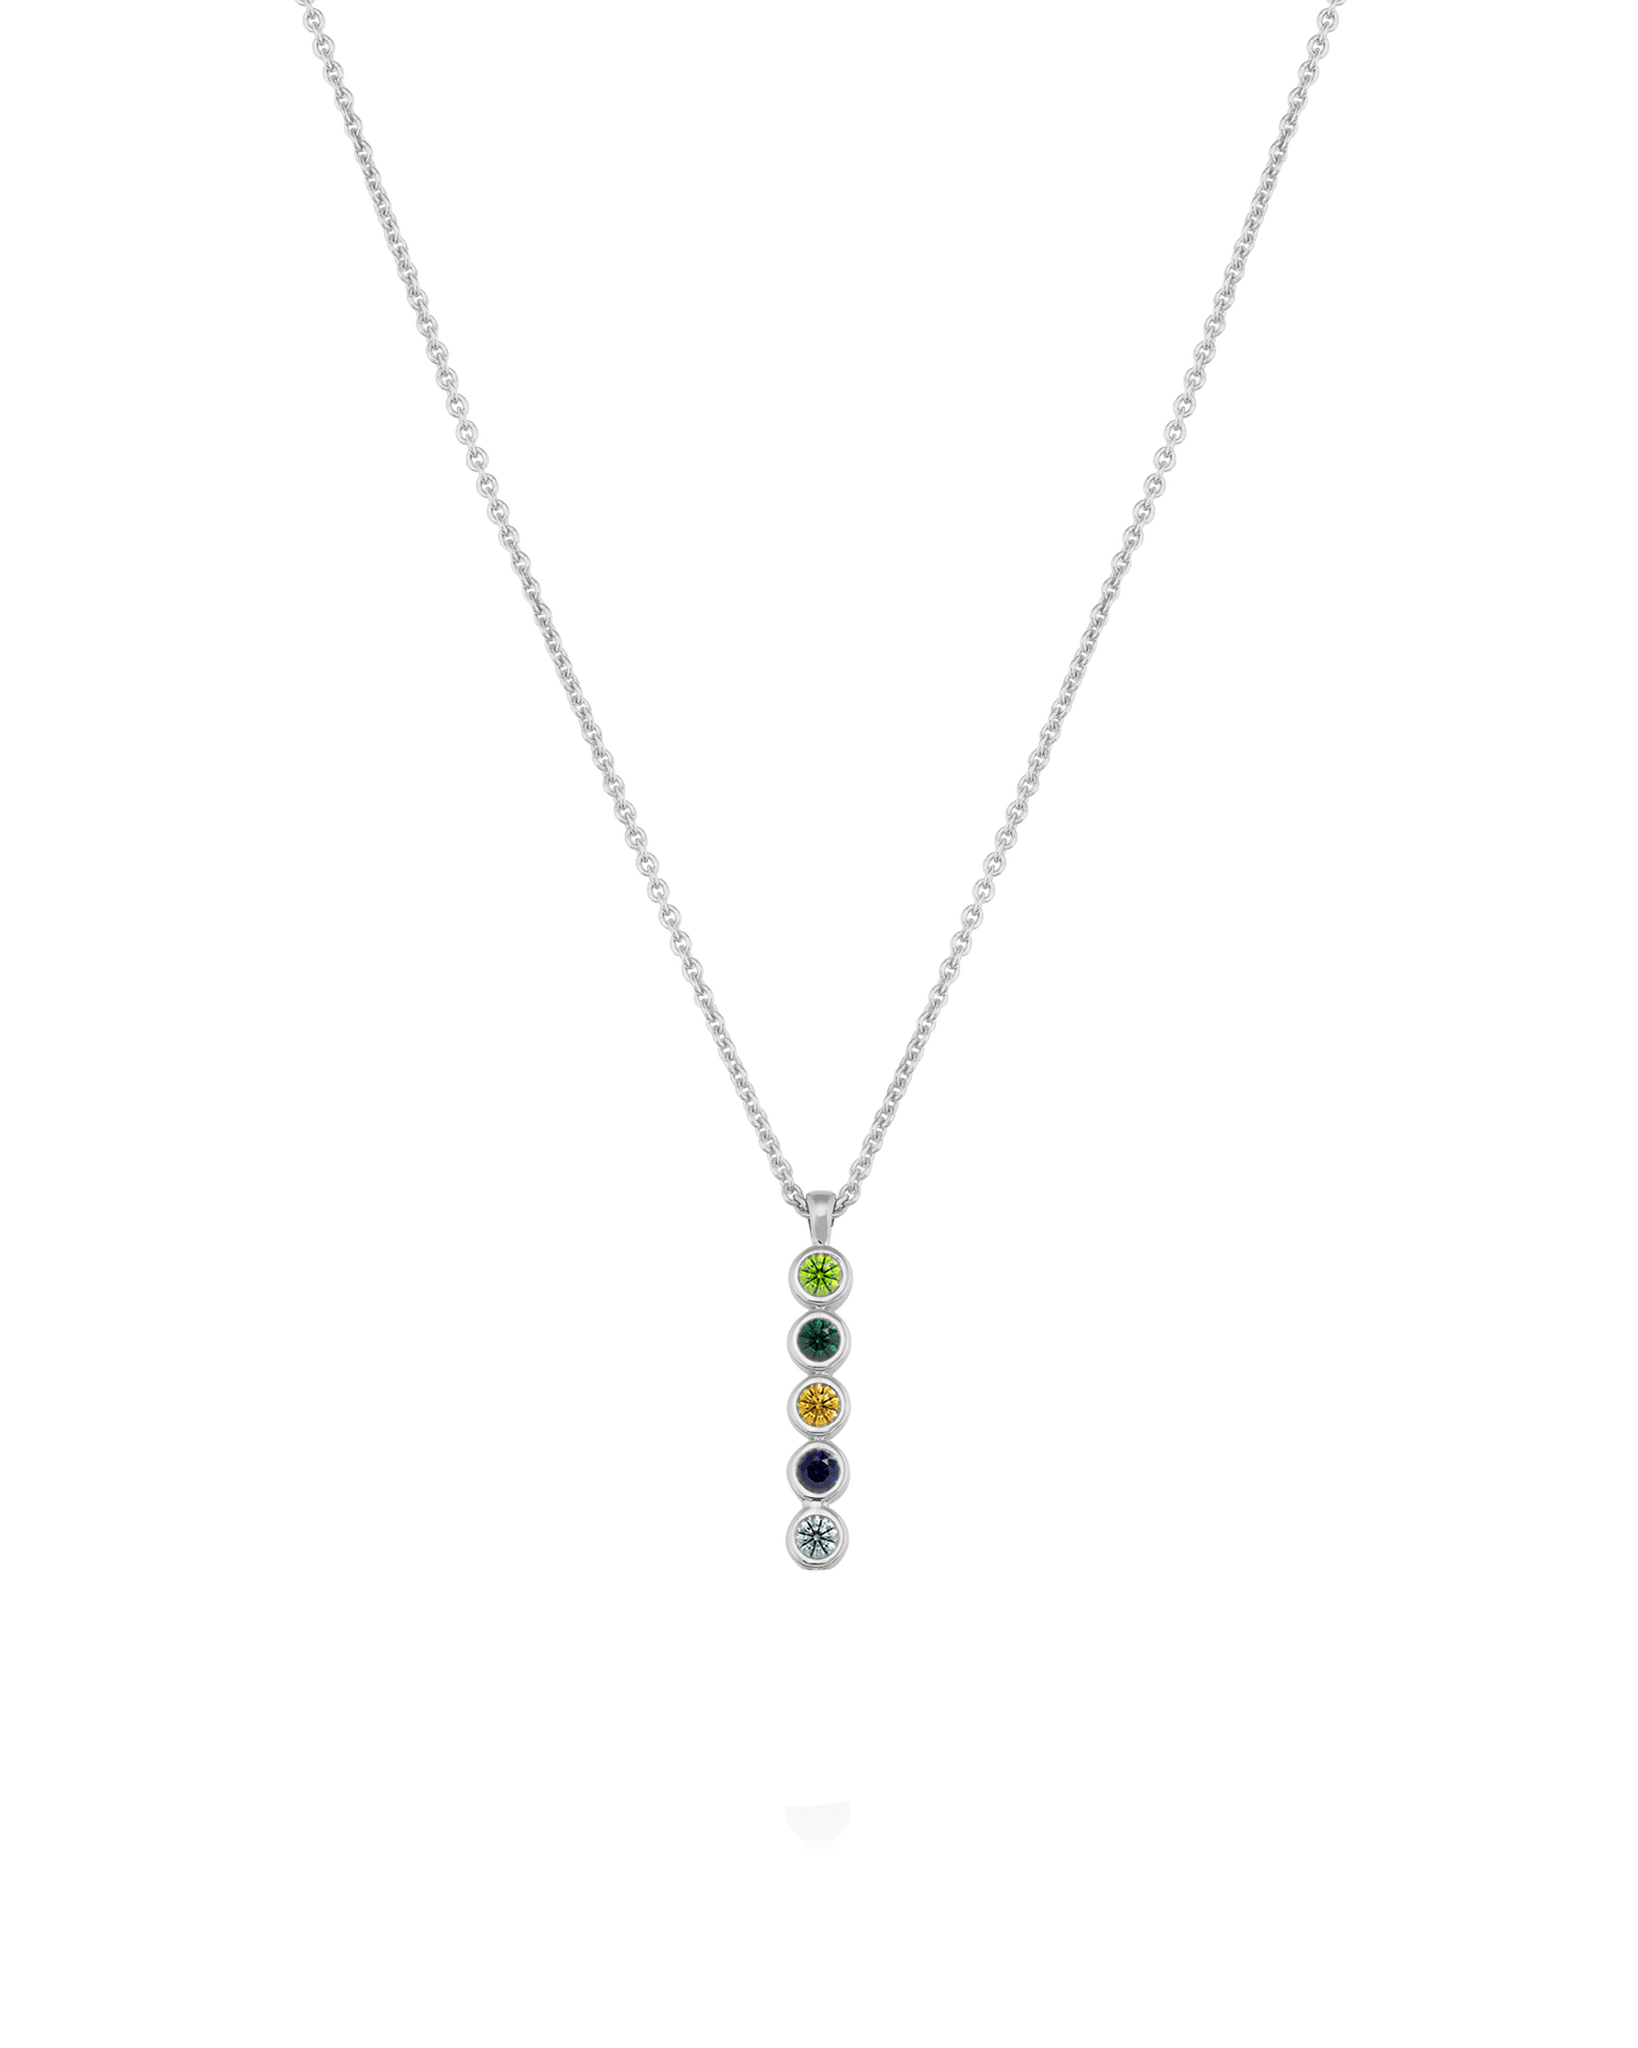 Birthstone Bar Chain Necklace - 18K Gold Vermeil Necklaces Gold Vermeil 